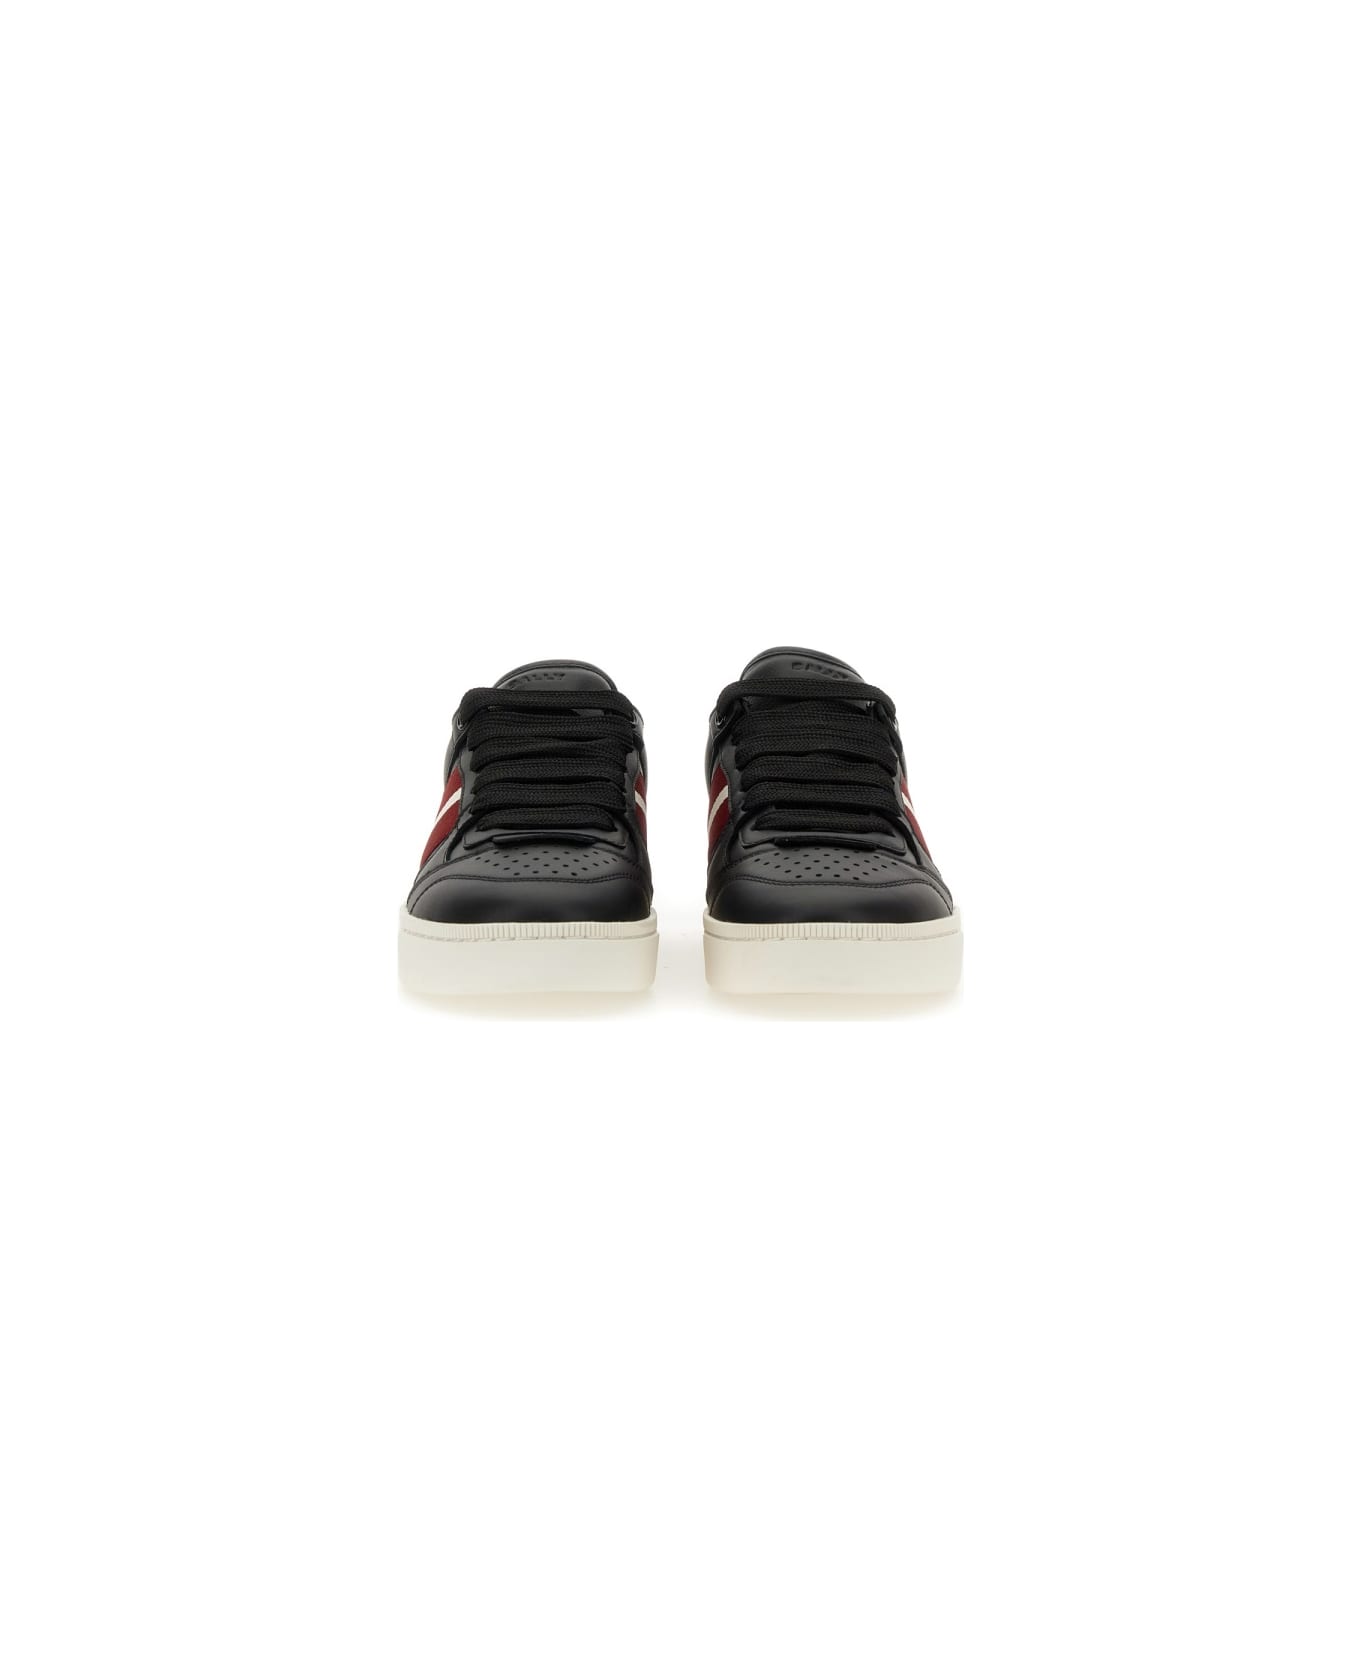 Bally 'rebby-w' Sneaker - Black/bally Red スニーカー